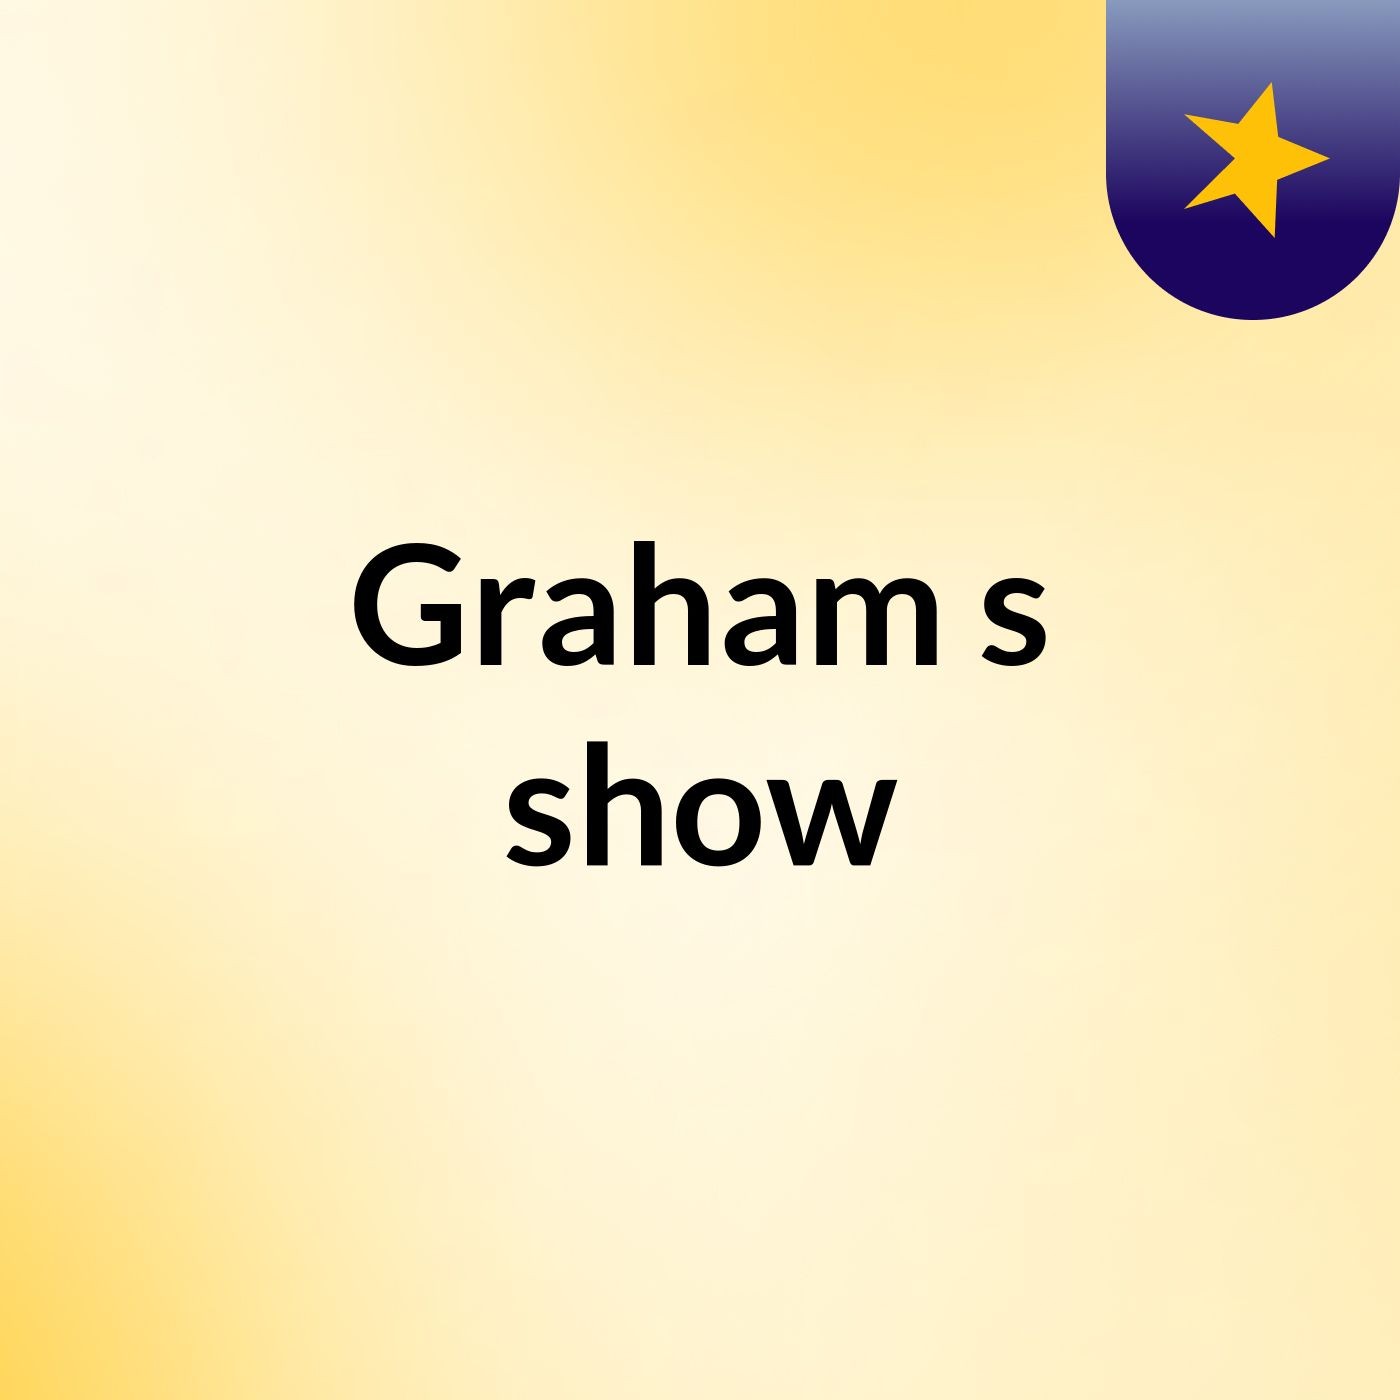 Graham's show